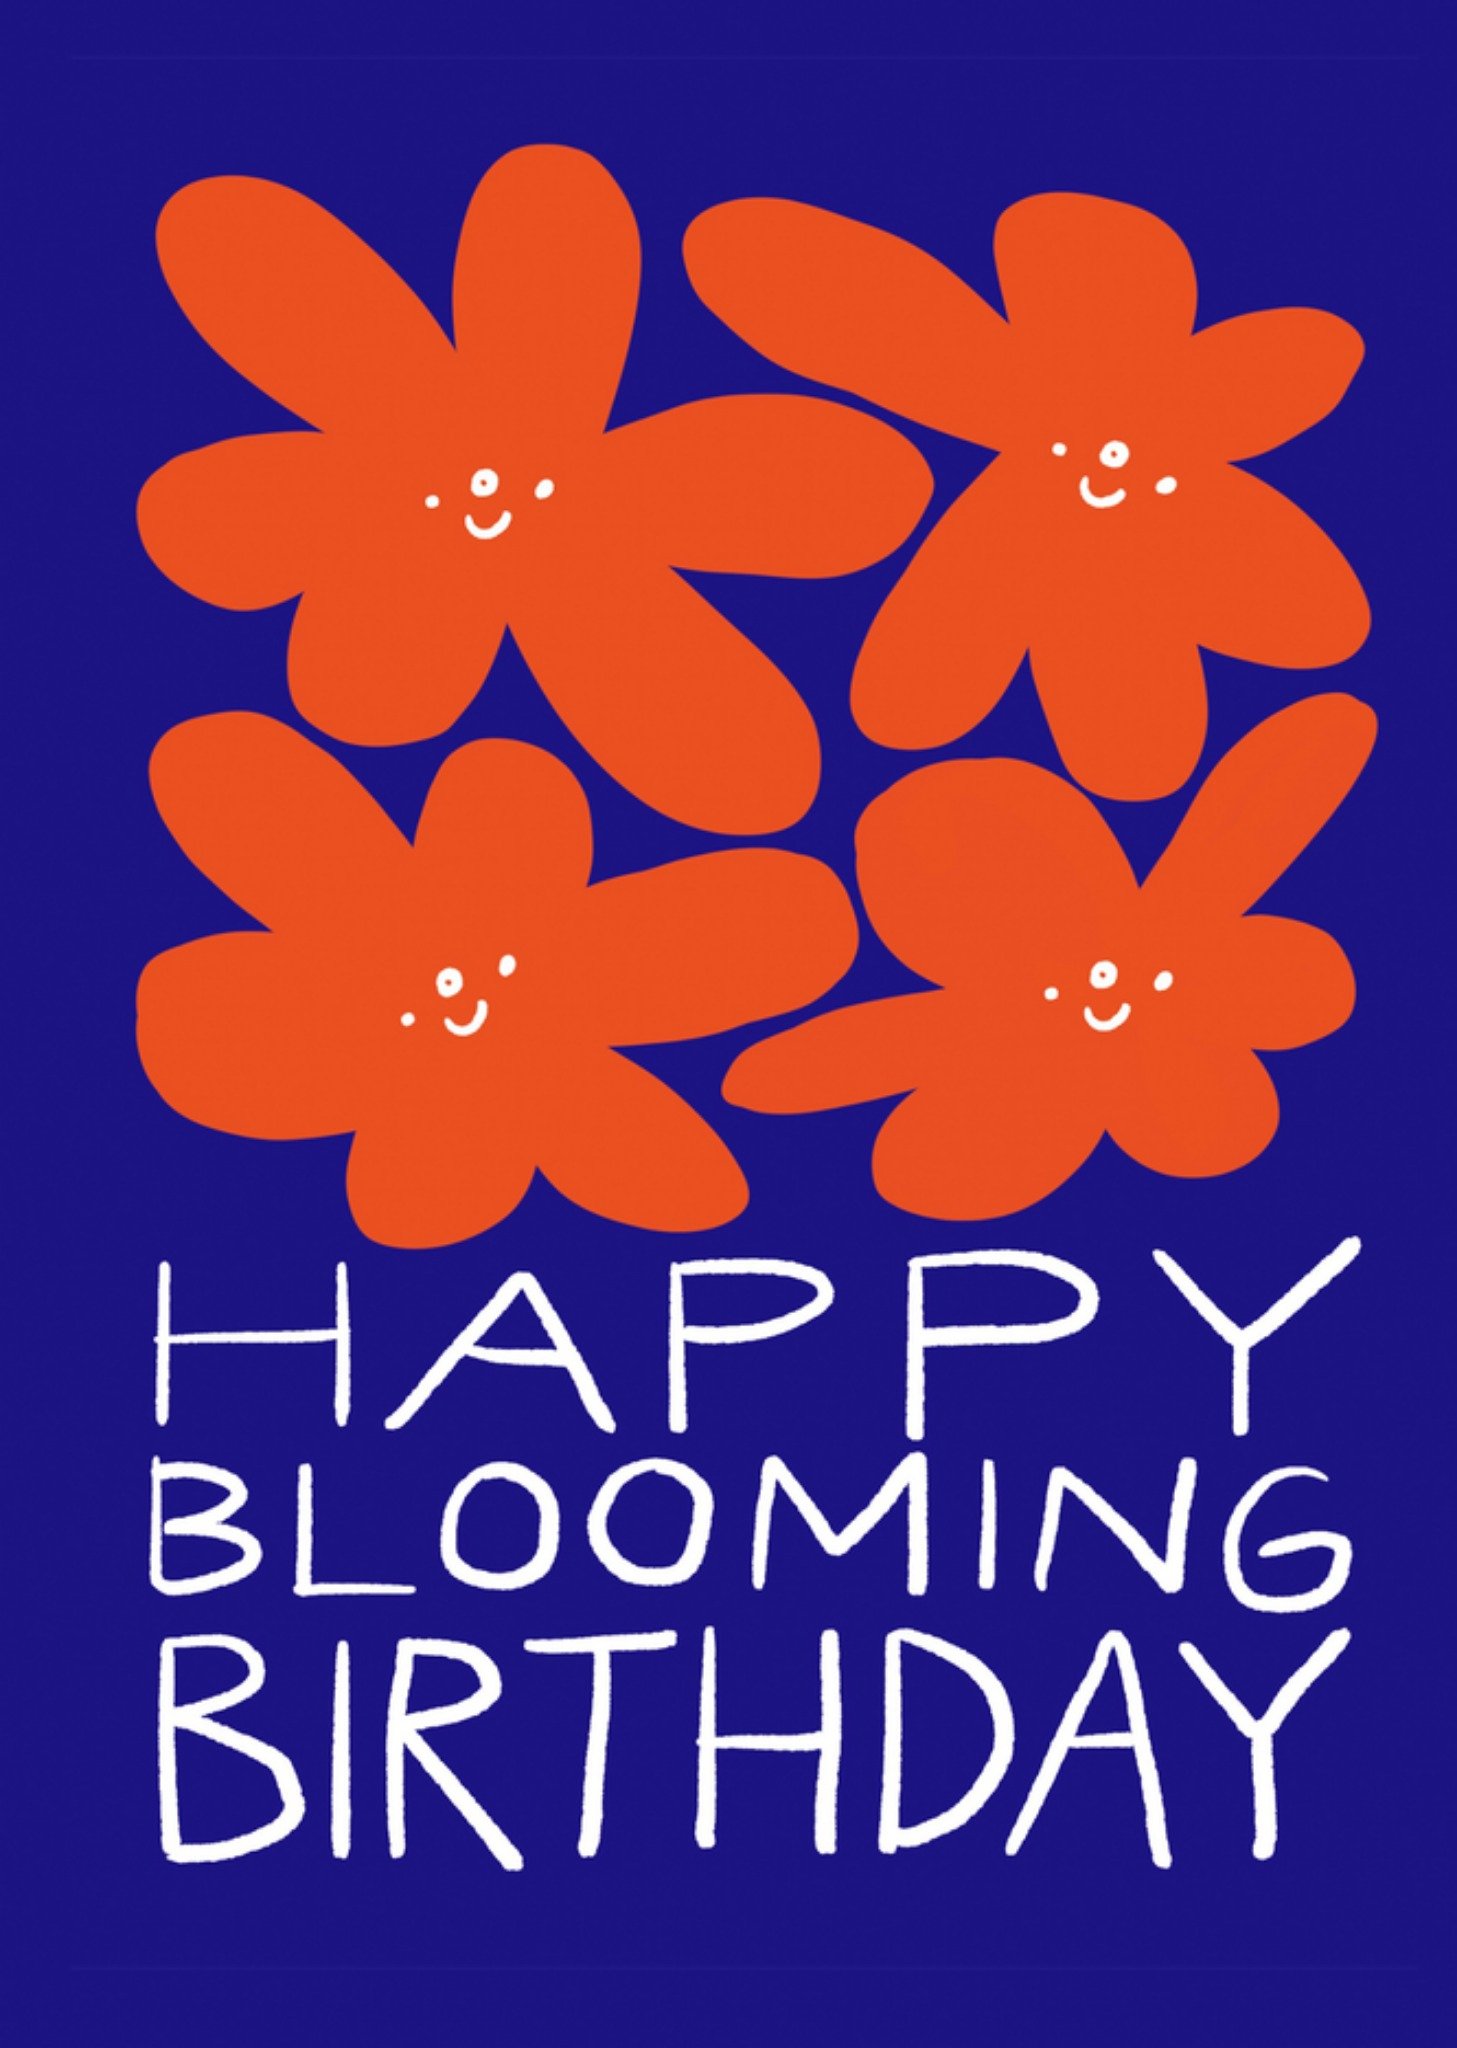 Moonpig Celebration Nation Brighter Days By Chloe Watts Happy Blooming Birthday Card Ecard